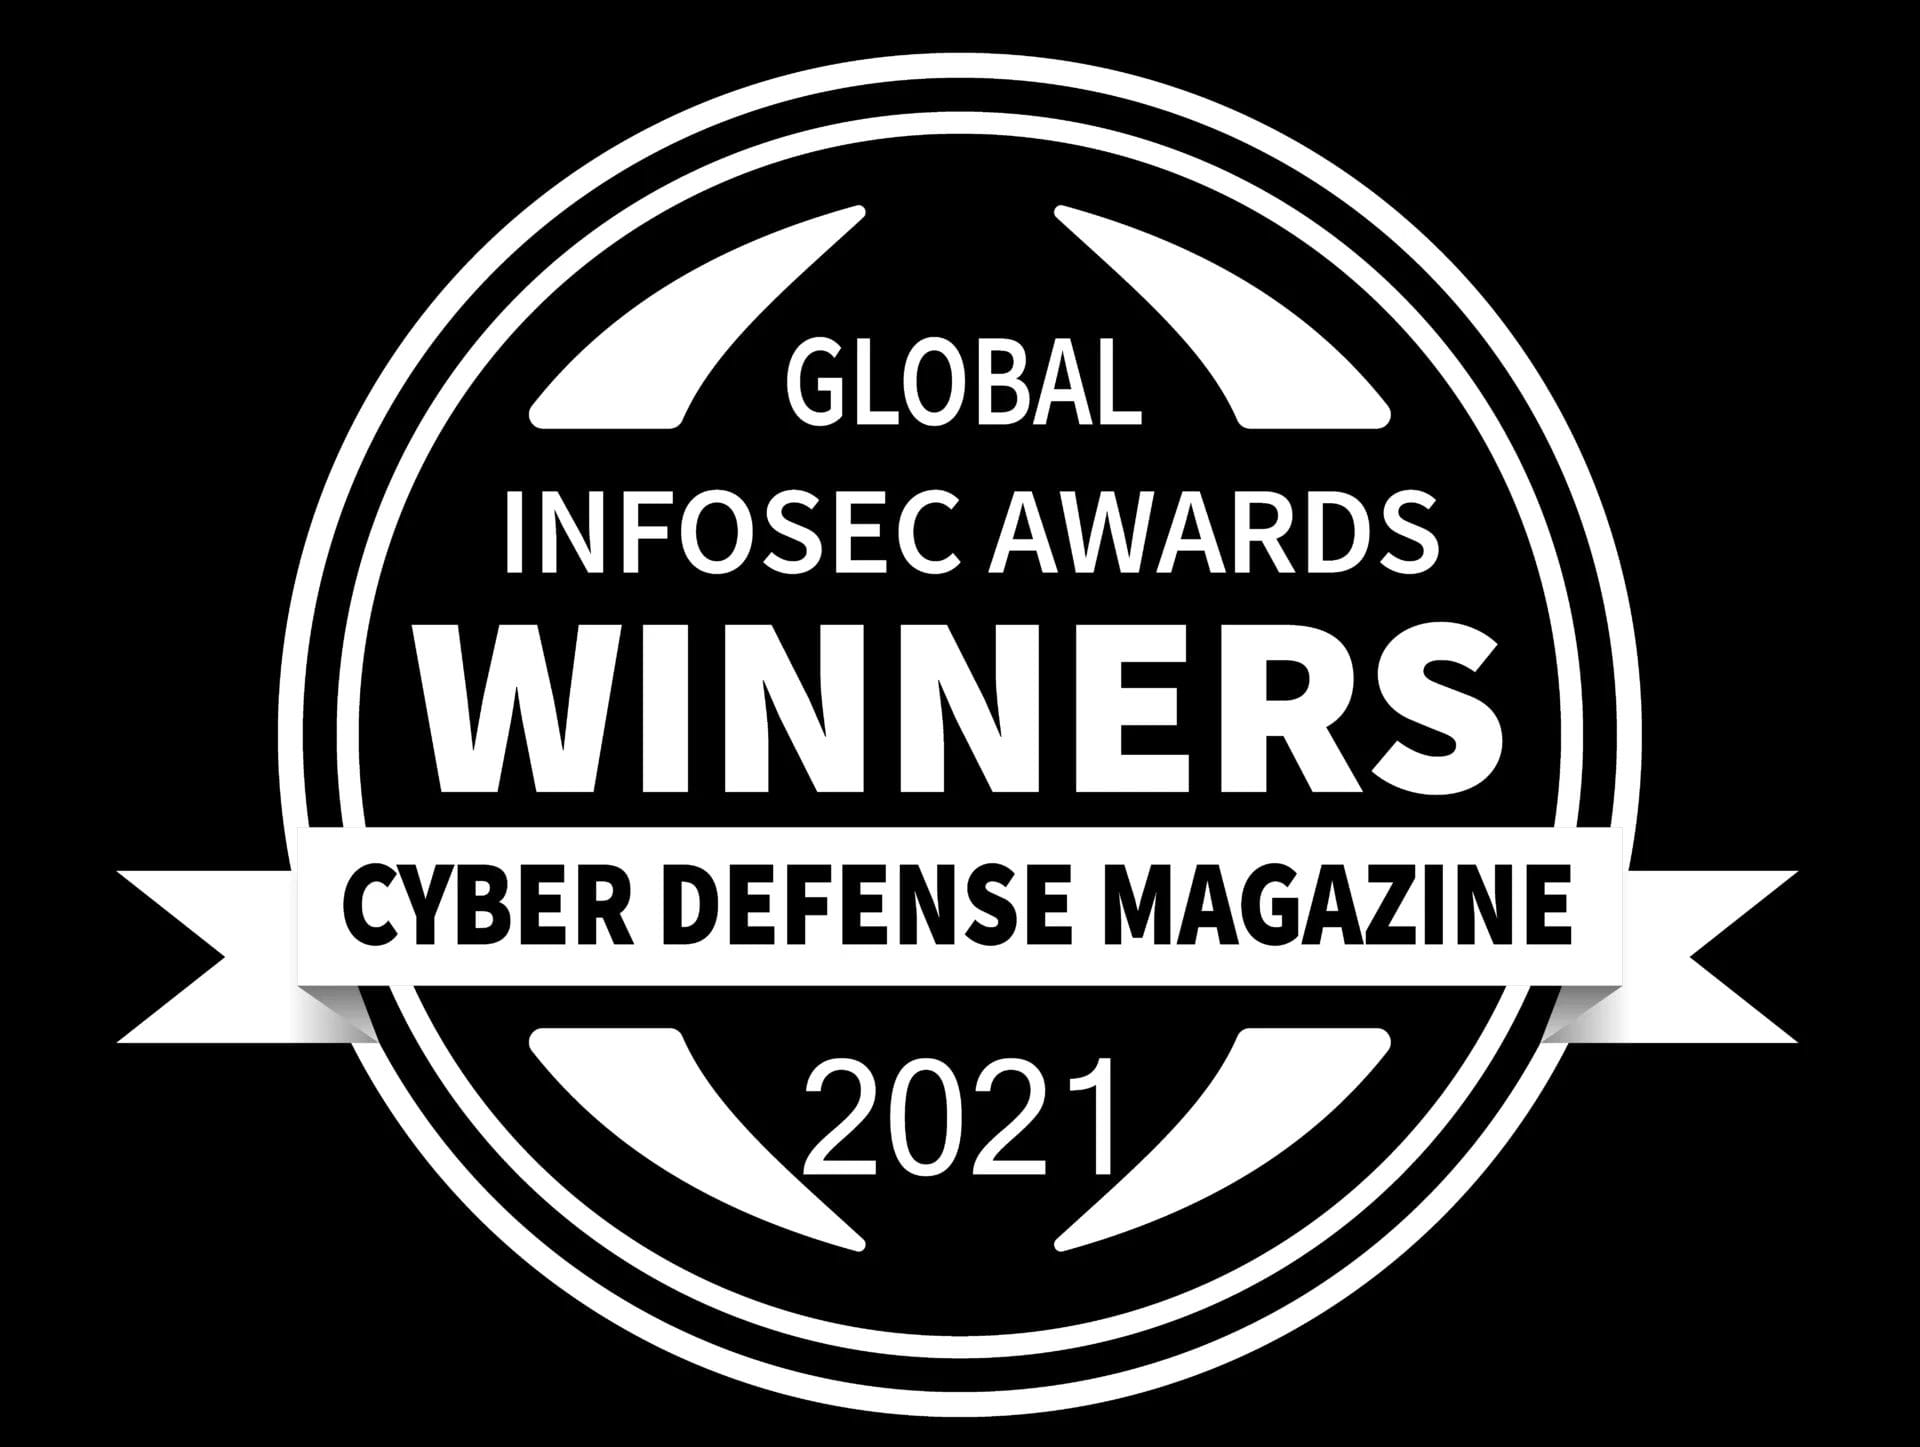 Global Infosec Awards Winners 2021